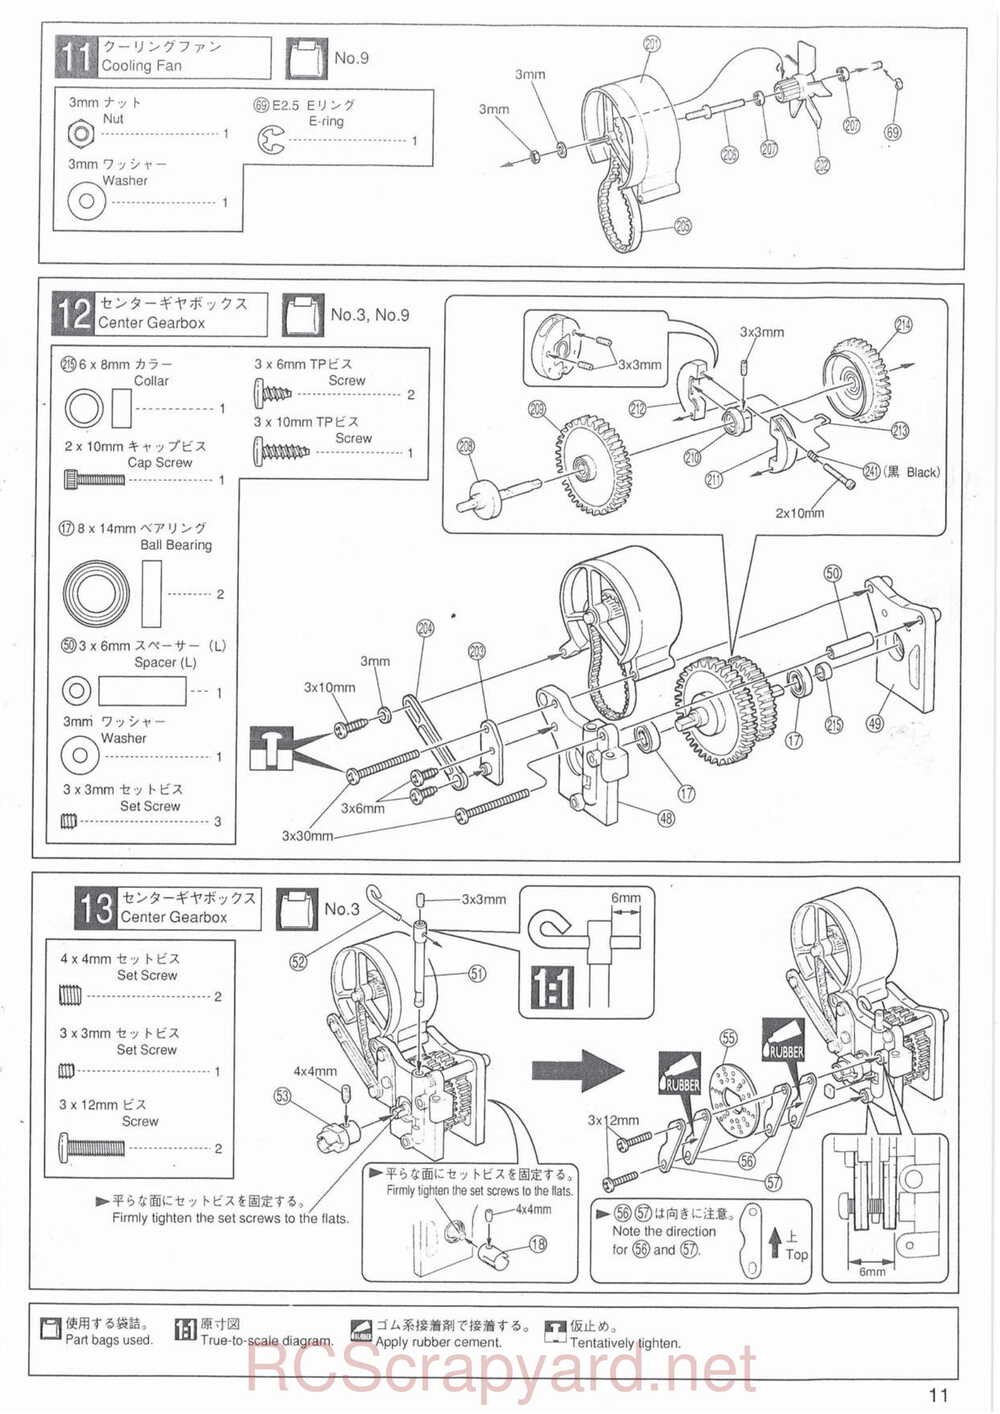 Kyosho - 31701 - Superten-Four FW-03 - Manual - Page 11